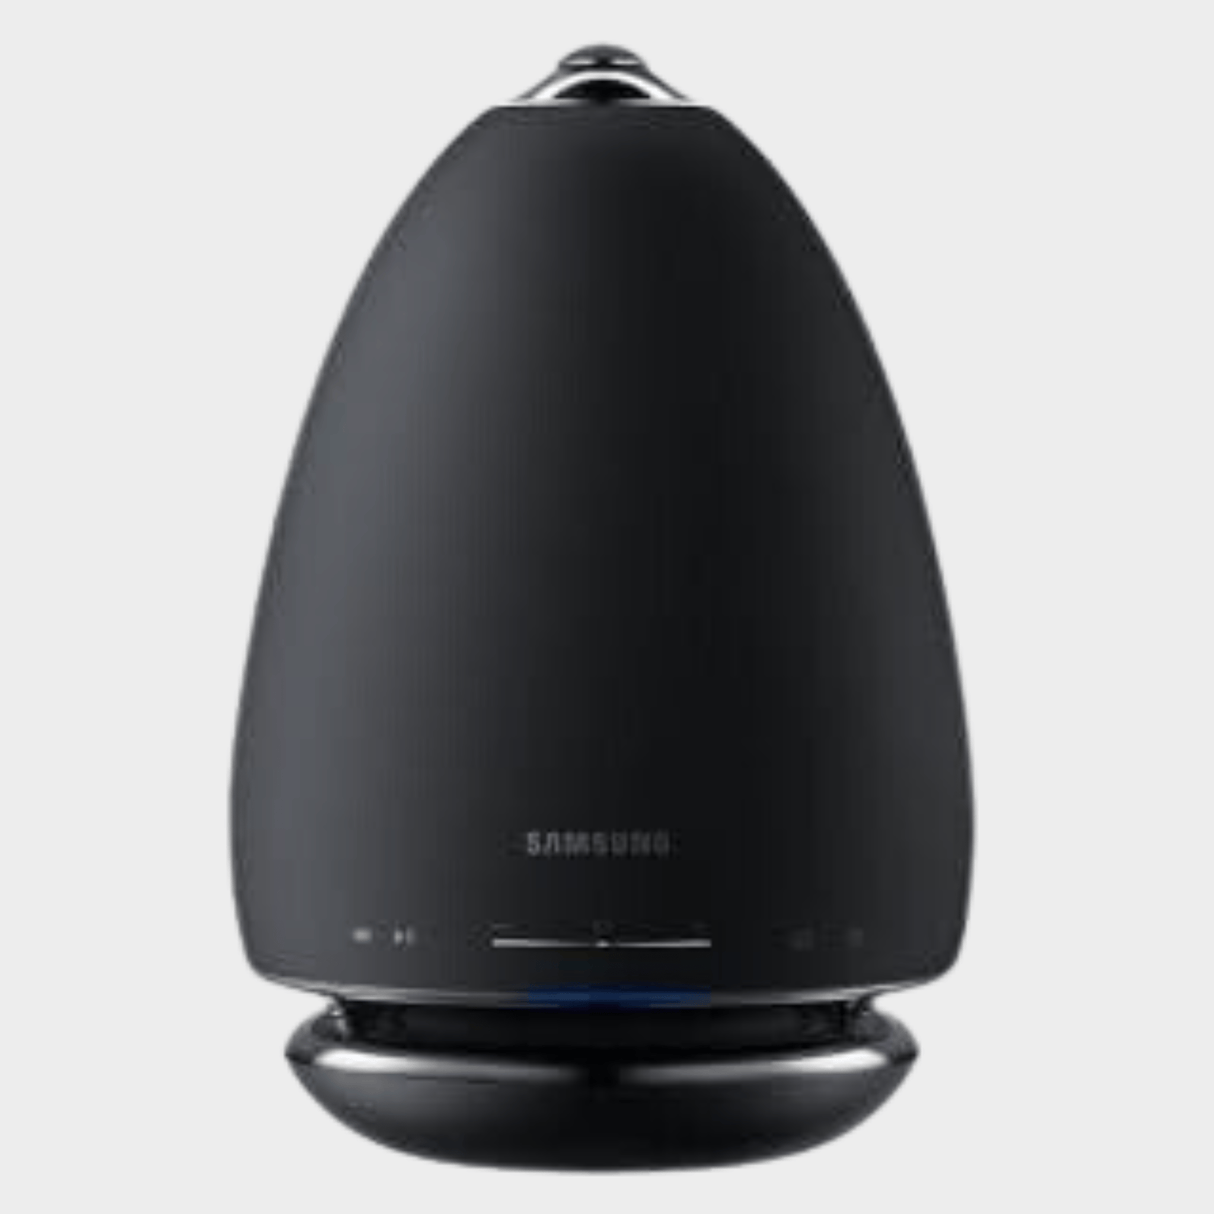 Samsung WAM-6500 Wireless 360 Speaker Multiroom Wireless Speaker – Black